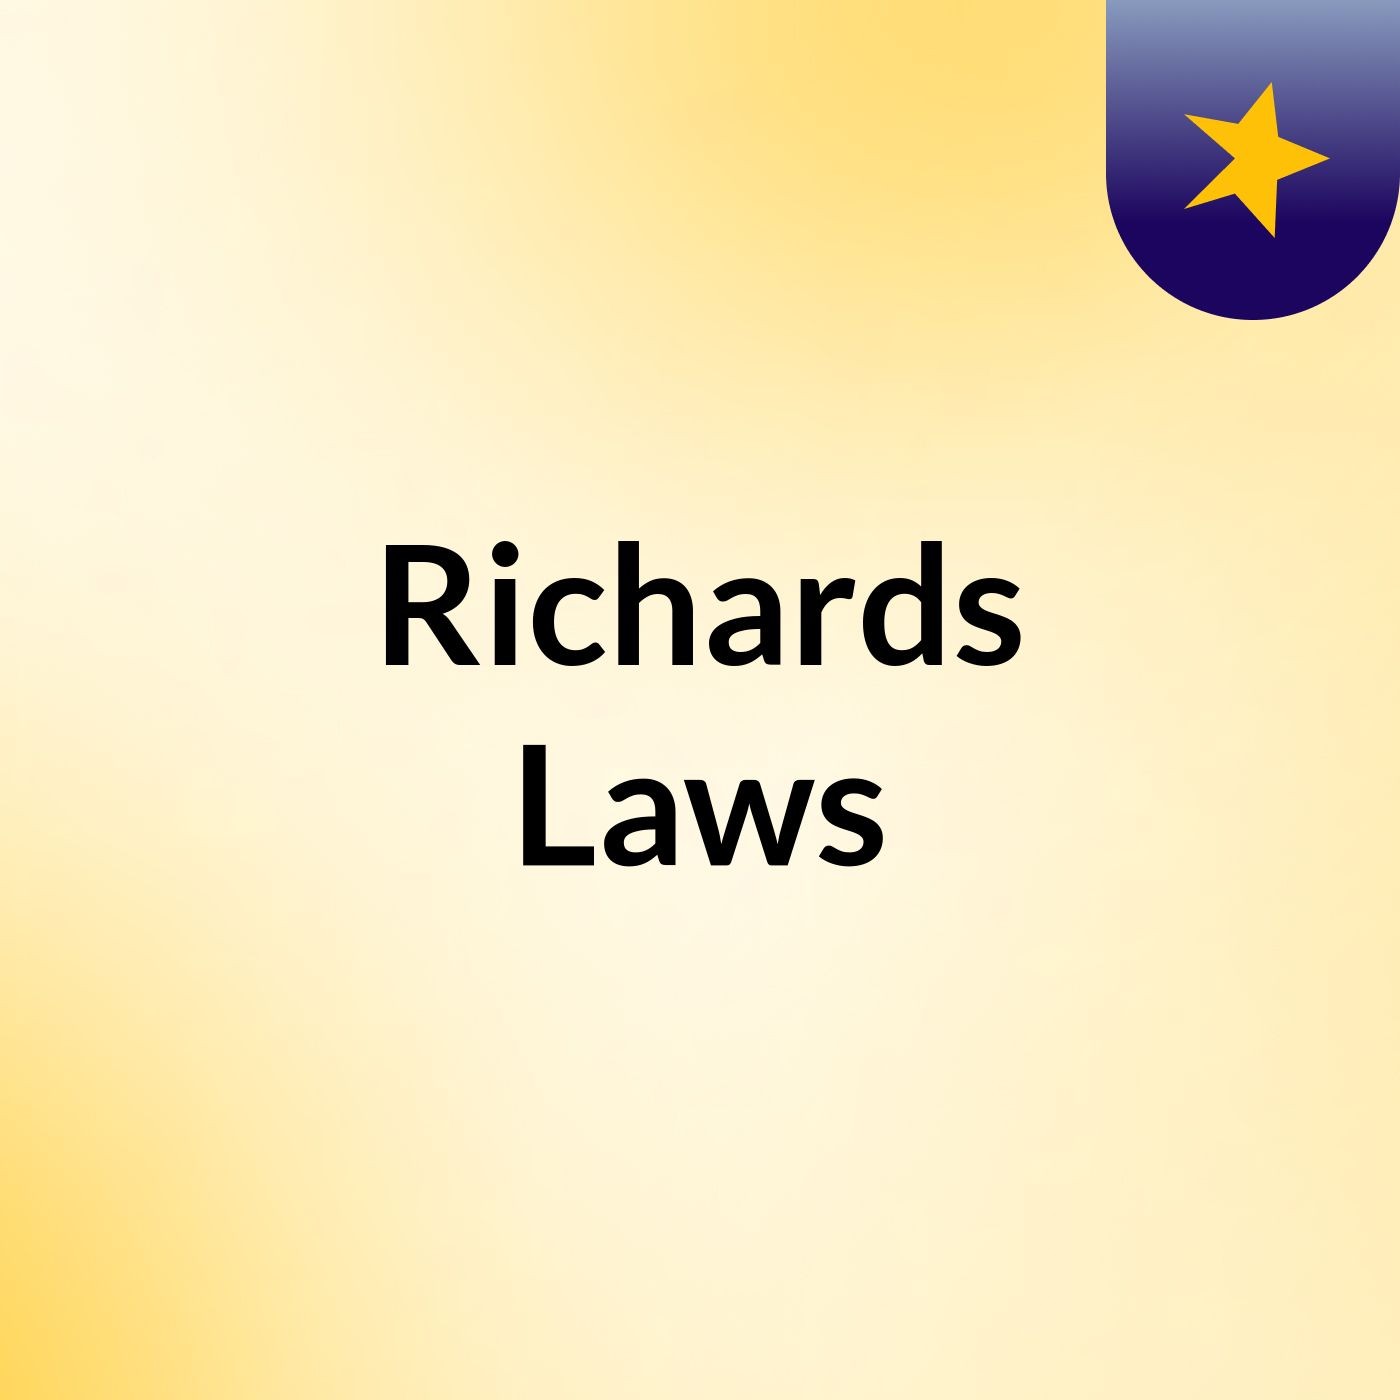 Richards Laws